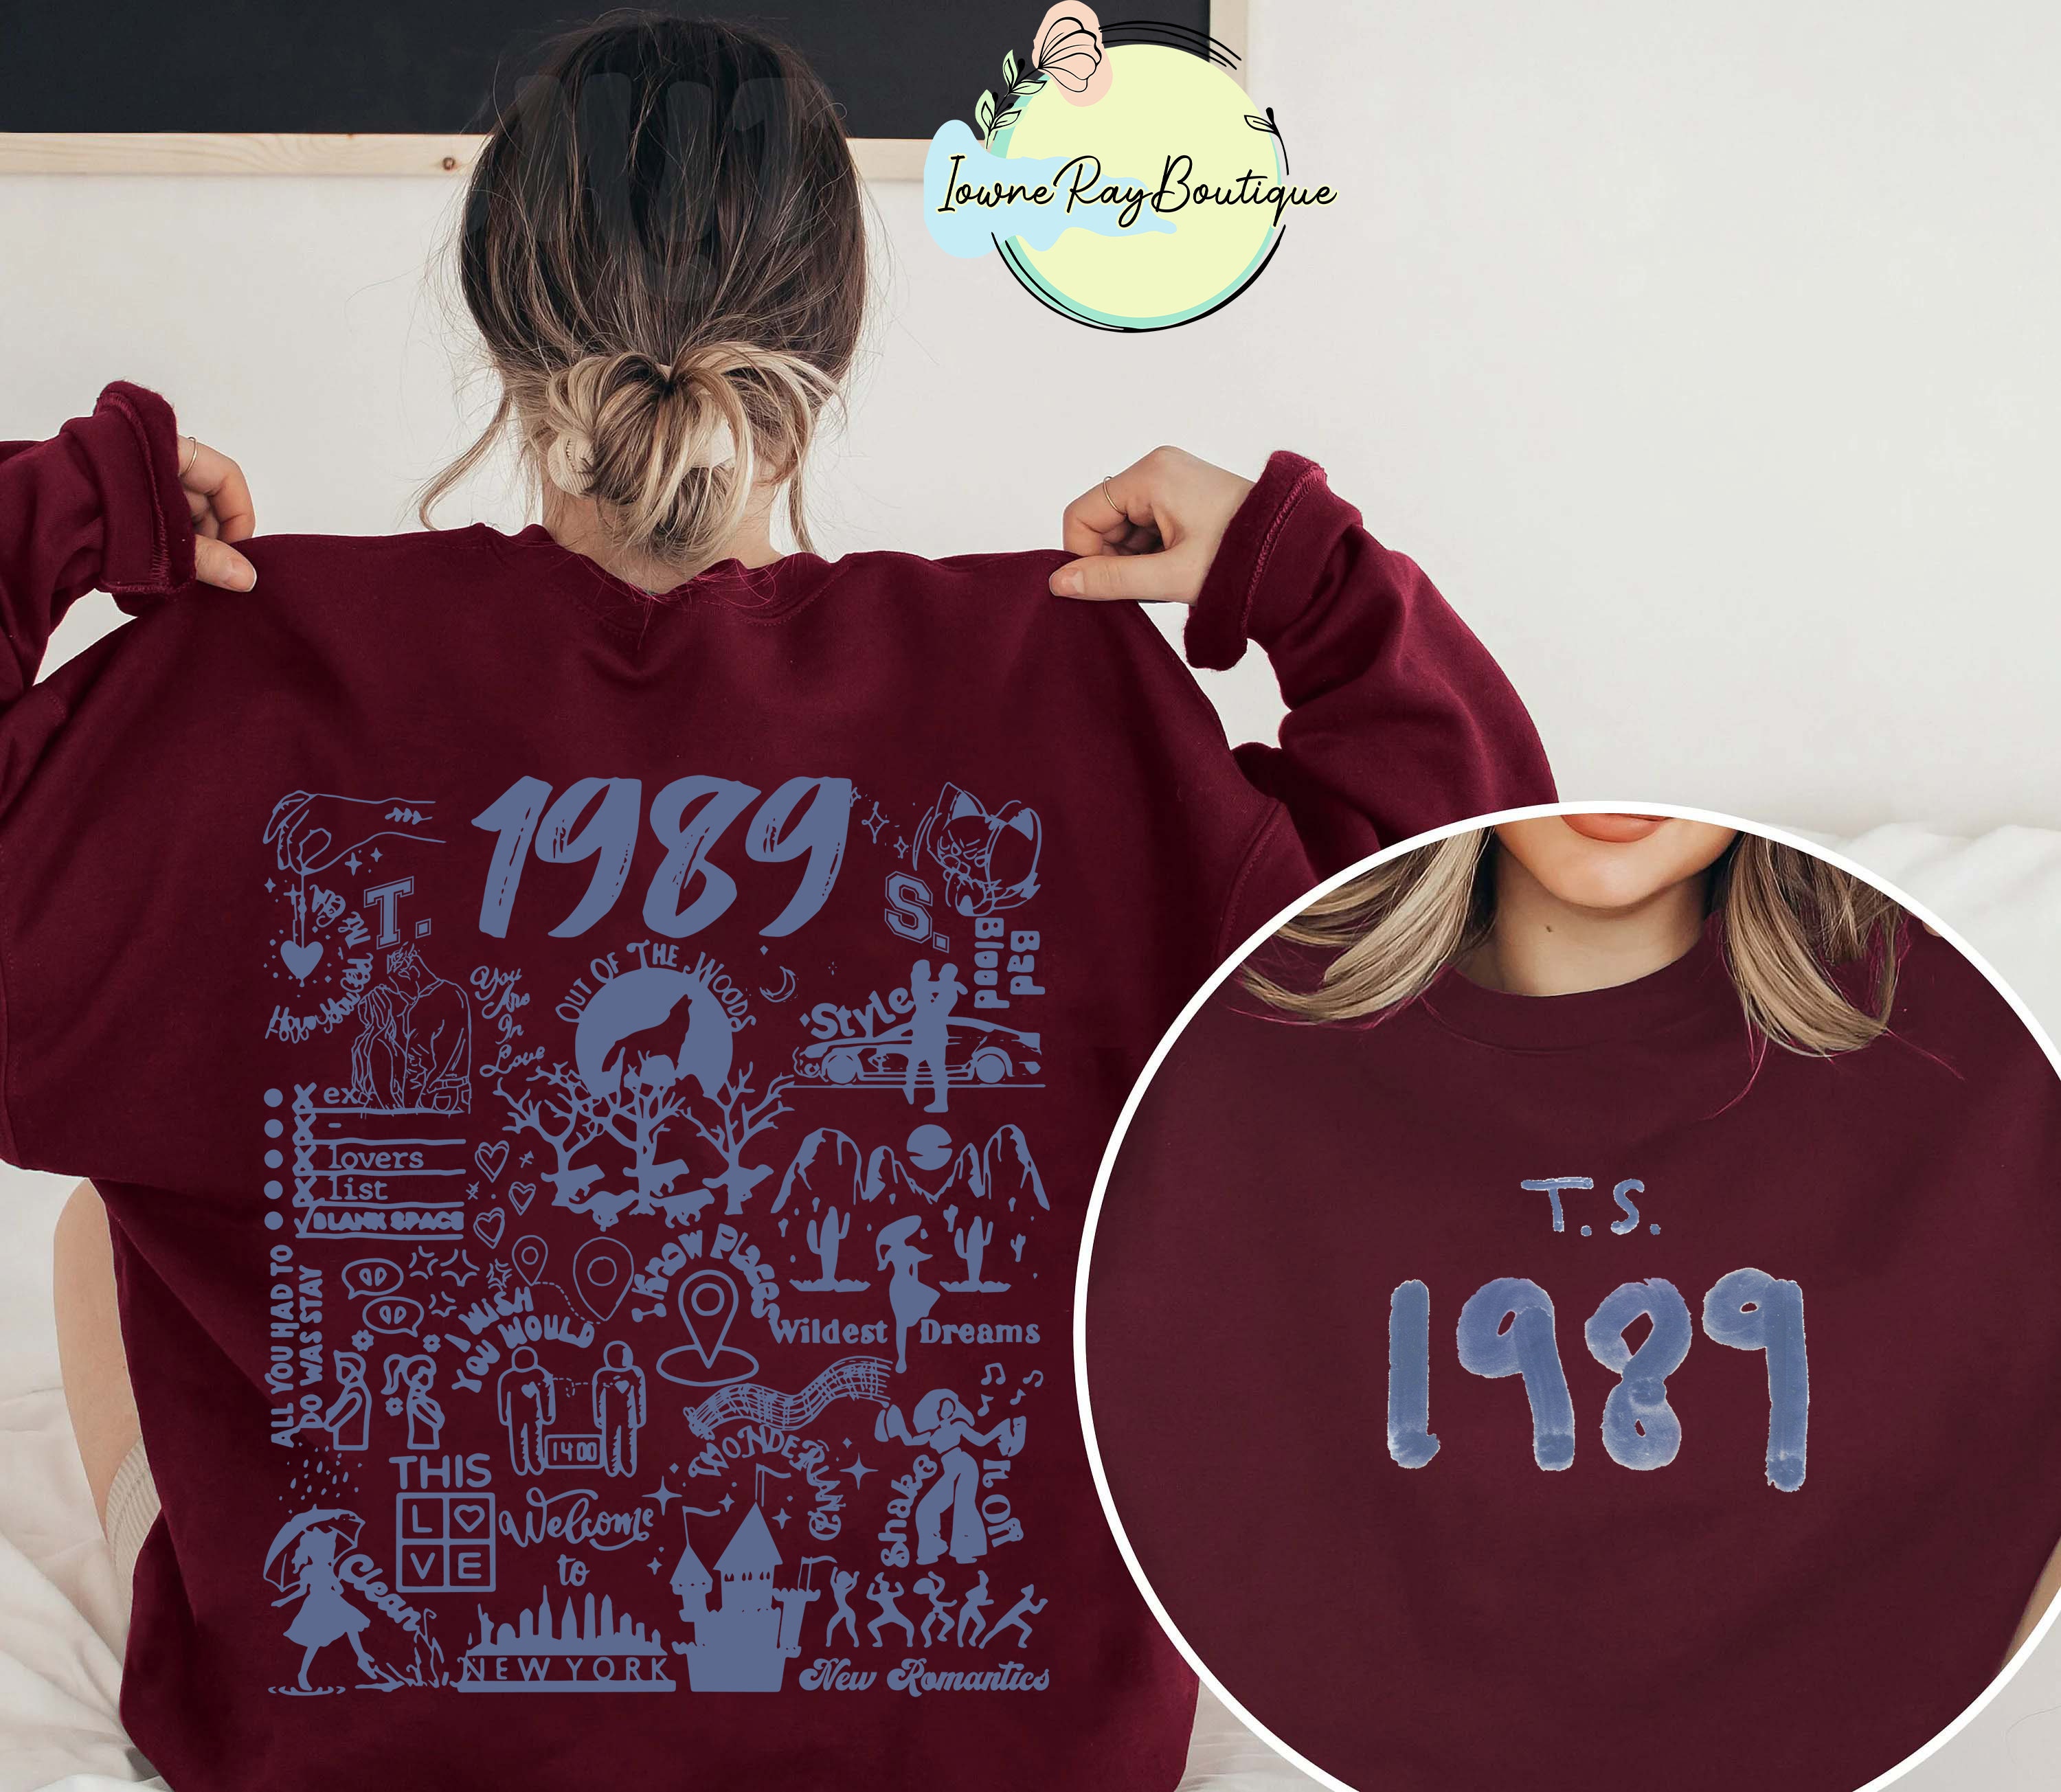 Discover Taylor 1989 Inspired Sweatshirt, The Eras Tour, TS 1989 Album, Taylor swiftiee Merch Sweatshirt